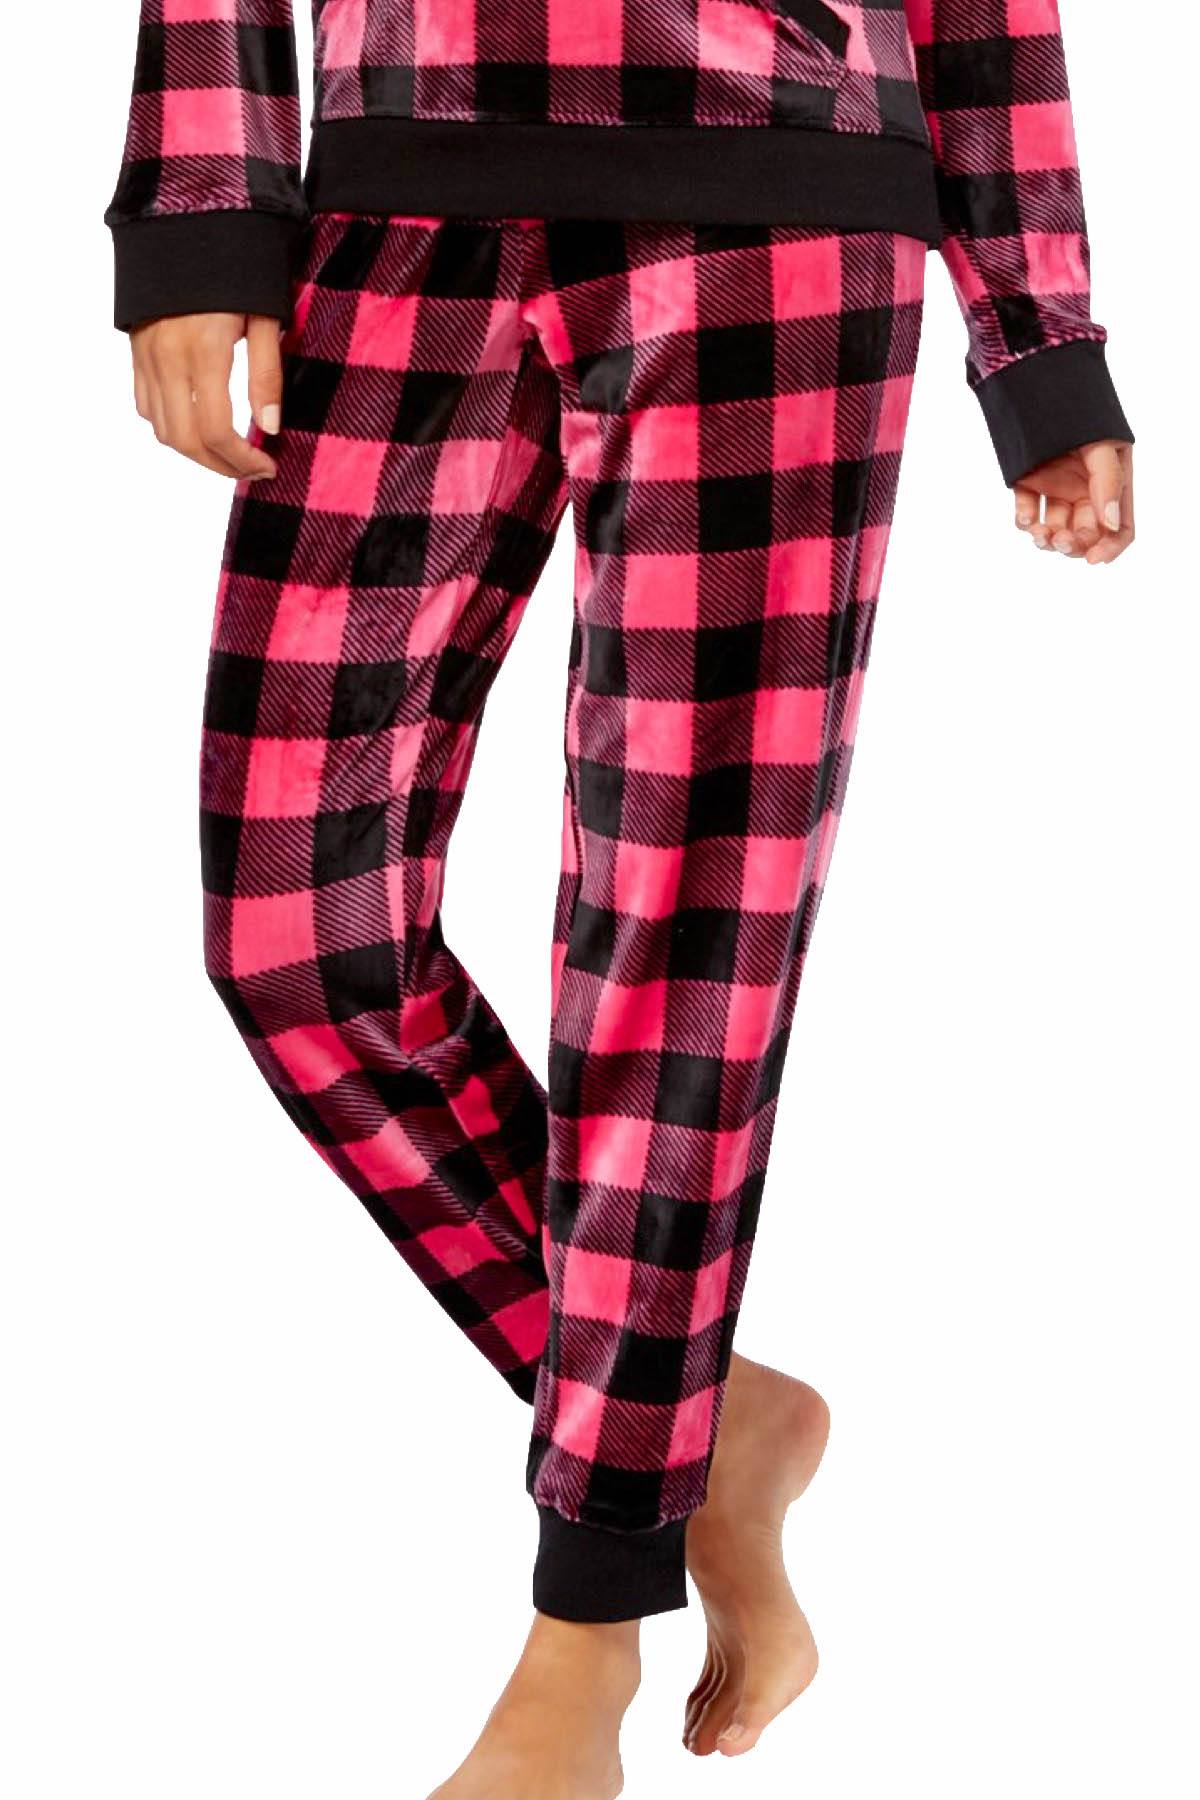 Jenni by Jennifer Moore Pink/Black Color-Check Printed Velour Pajama Set